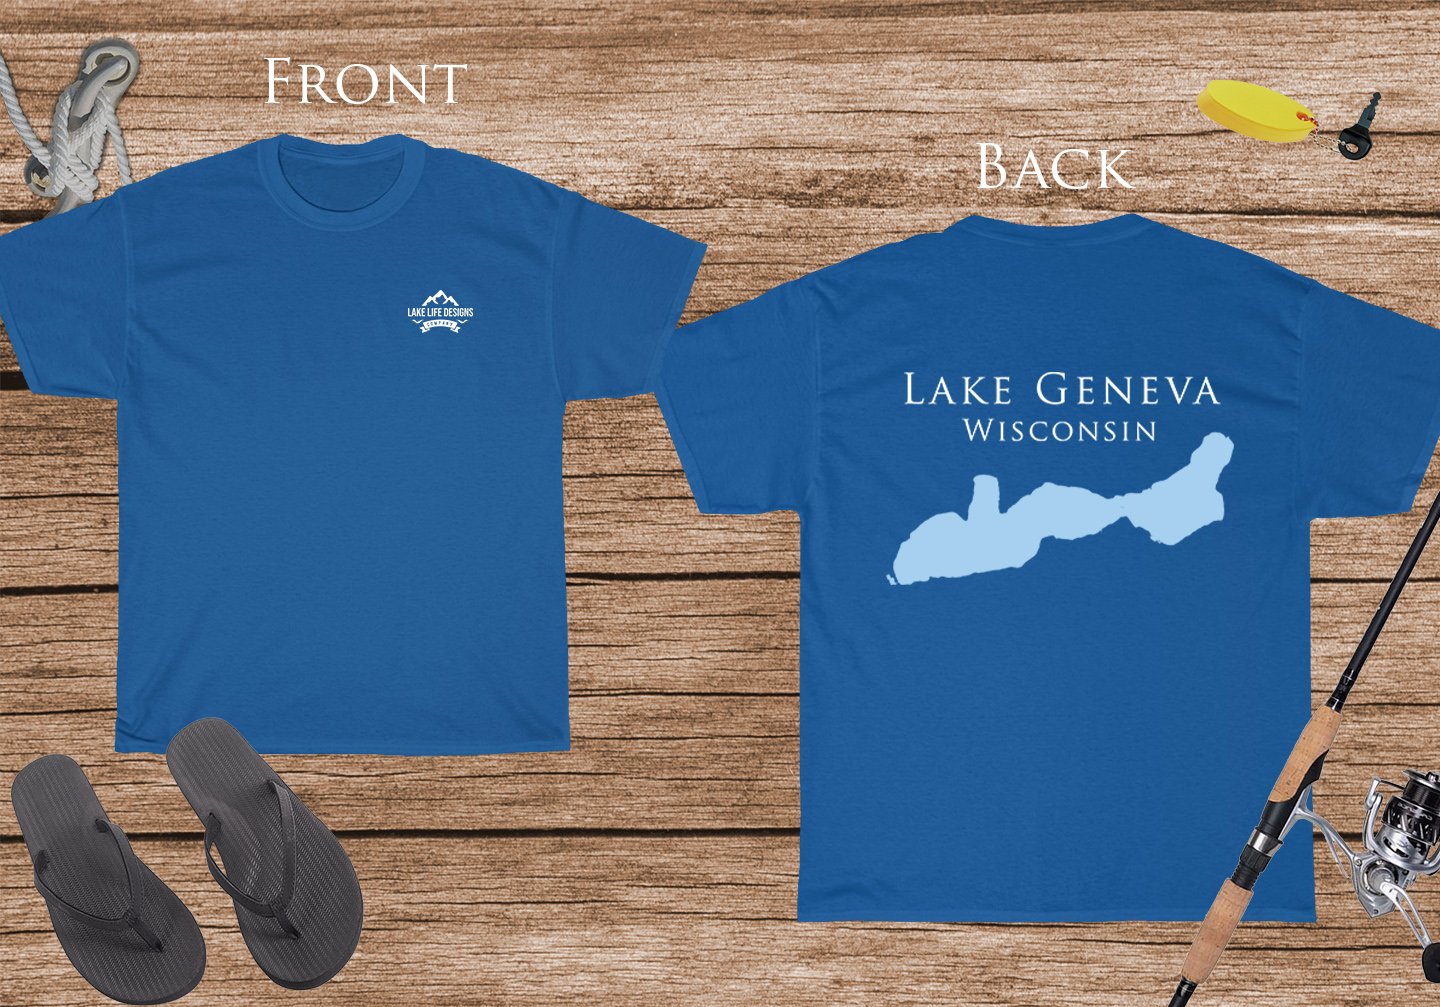 Lake Geneva - Cotton Short Sleeved - FRONT & BACK PRINTED - Short Sleeved Cotton Tee - Wisconsin Lake